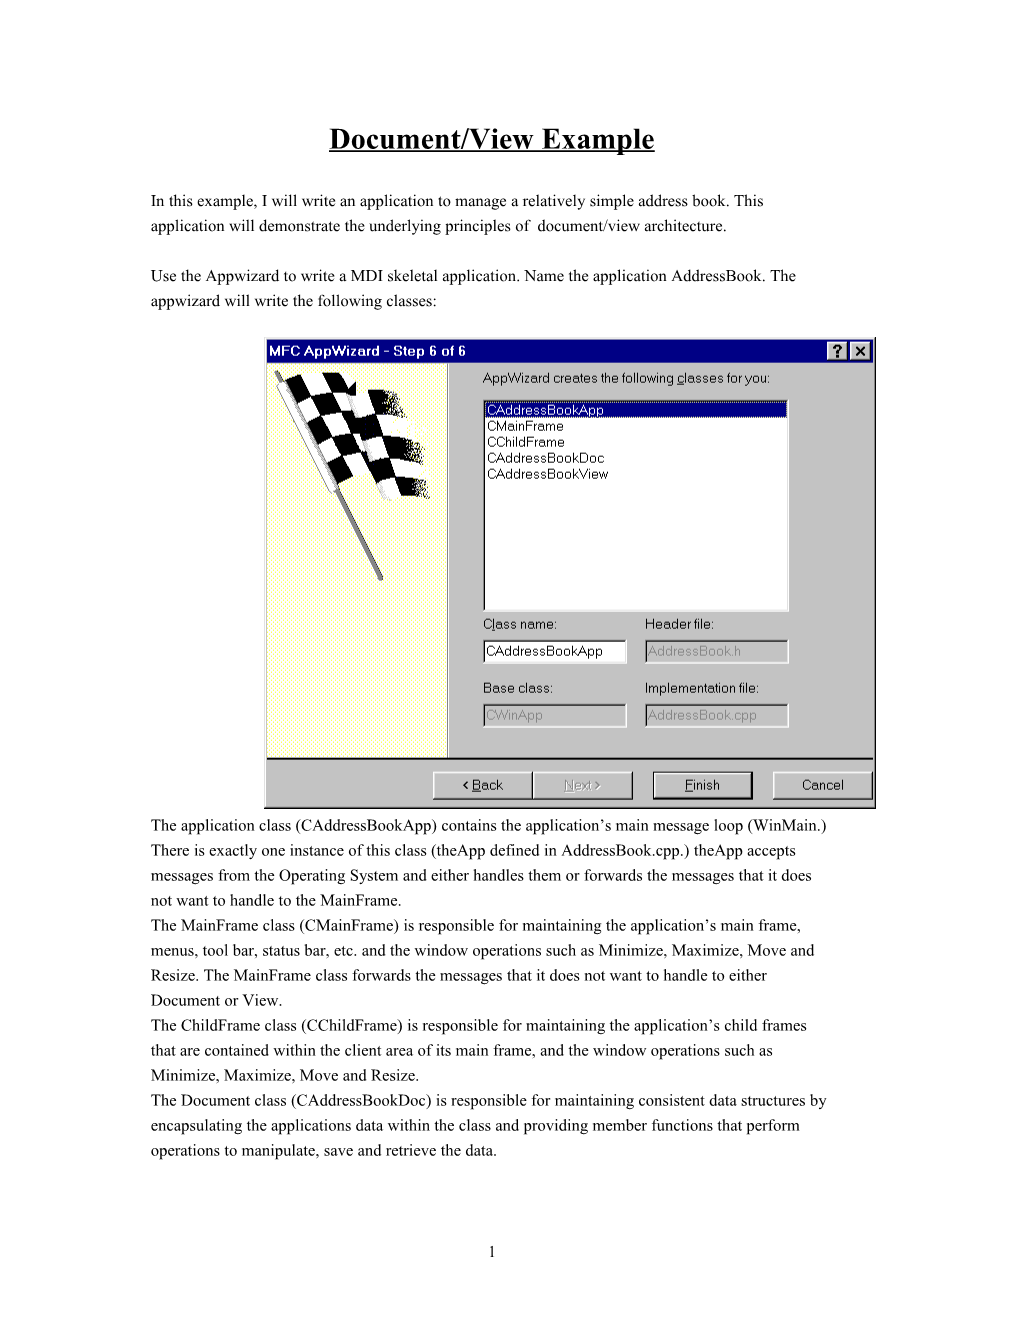 Document/View Example